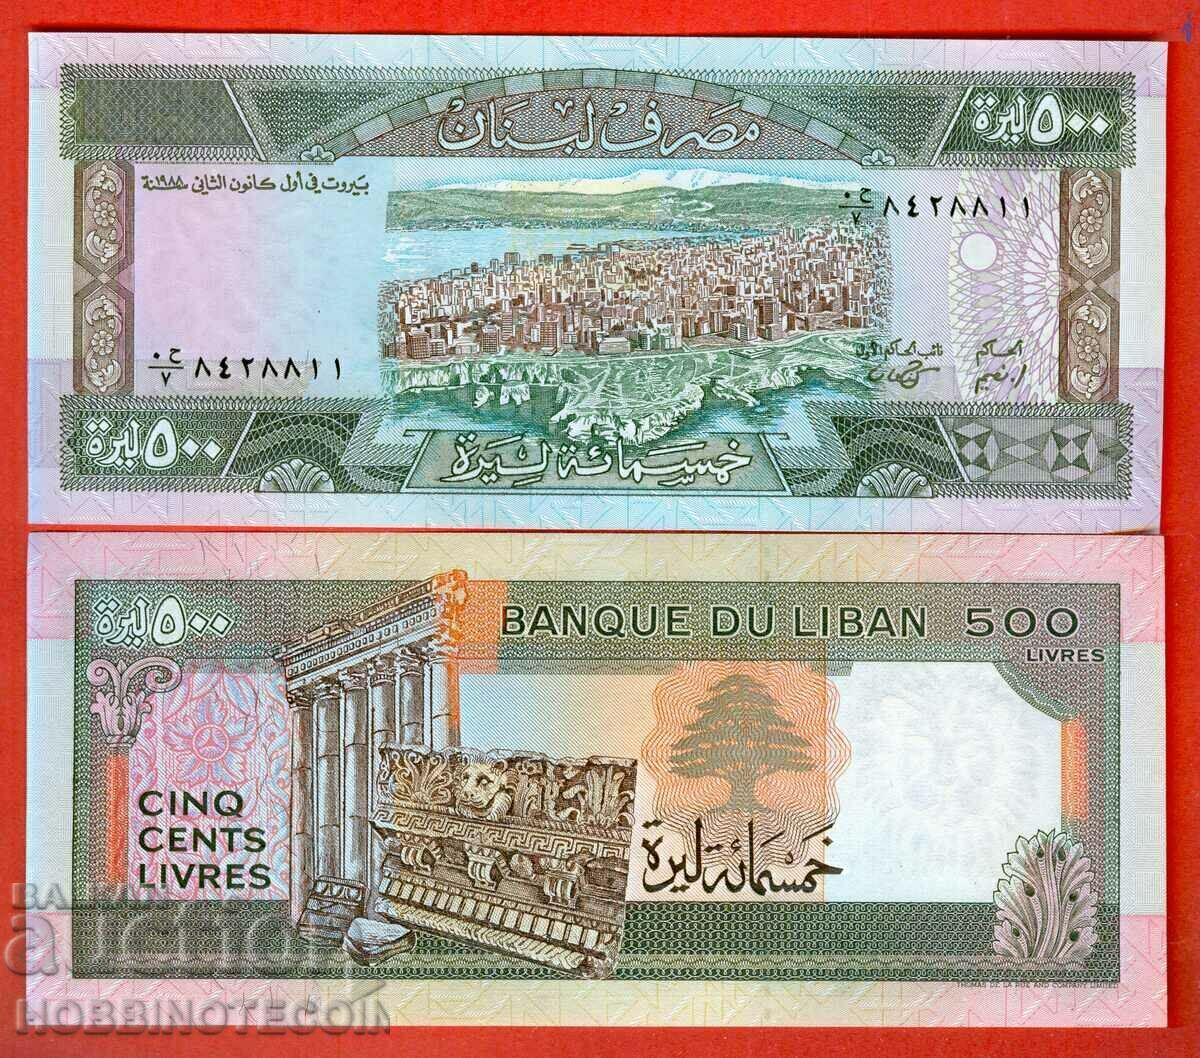 LIBAN LIBAN 500 Livres issue 1988 NOU UNC